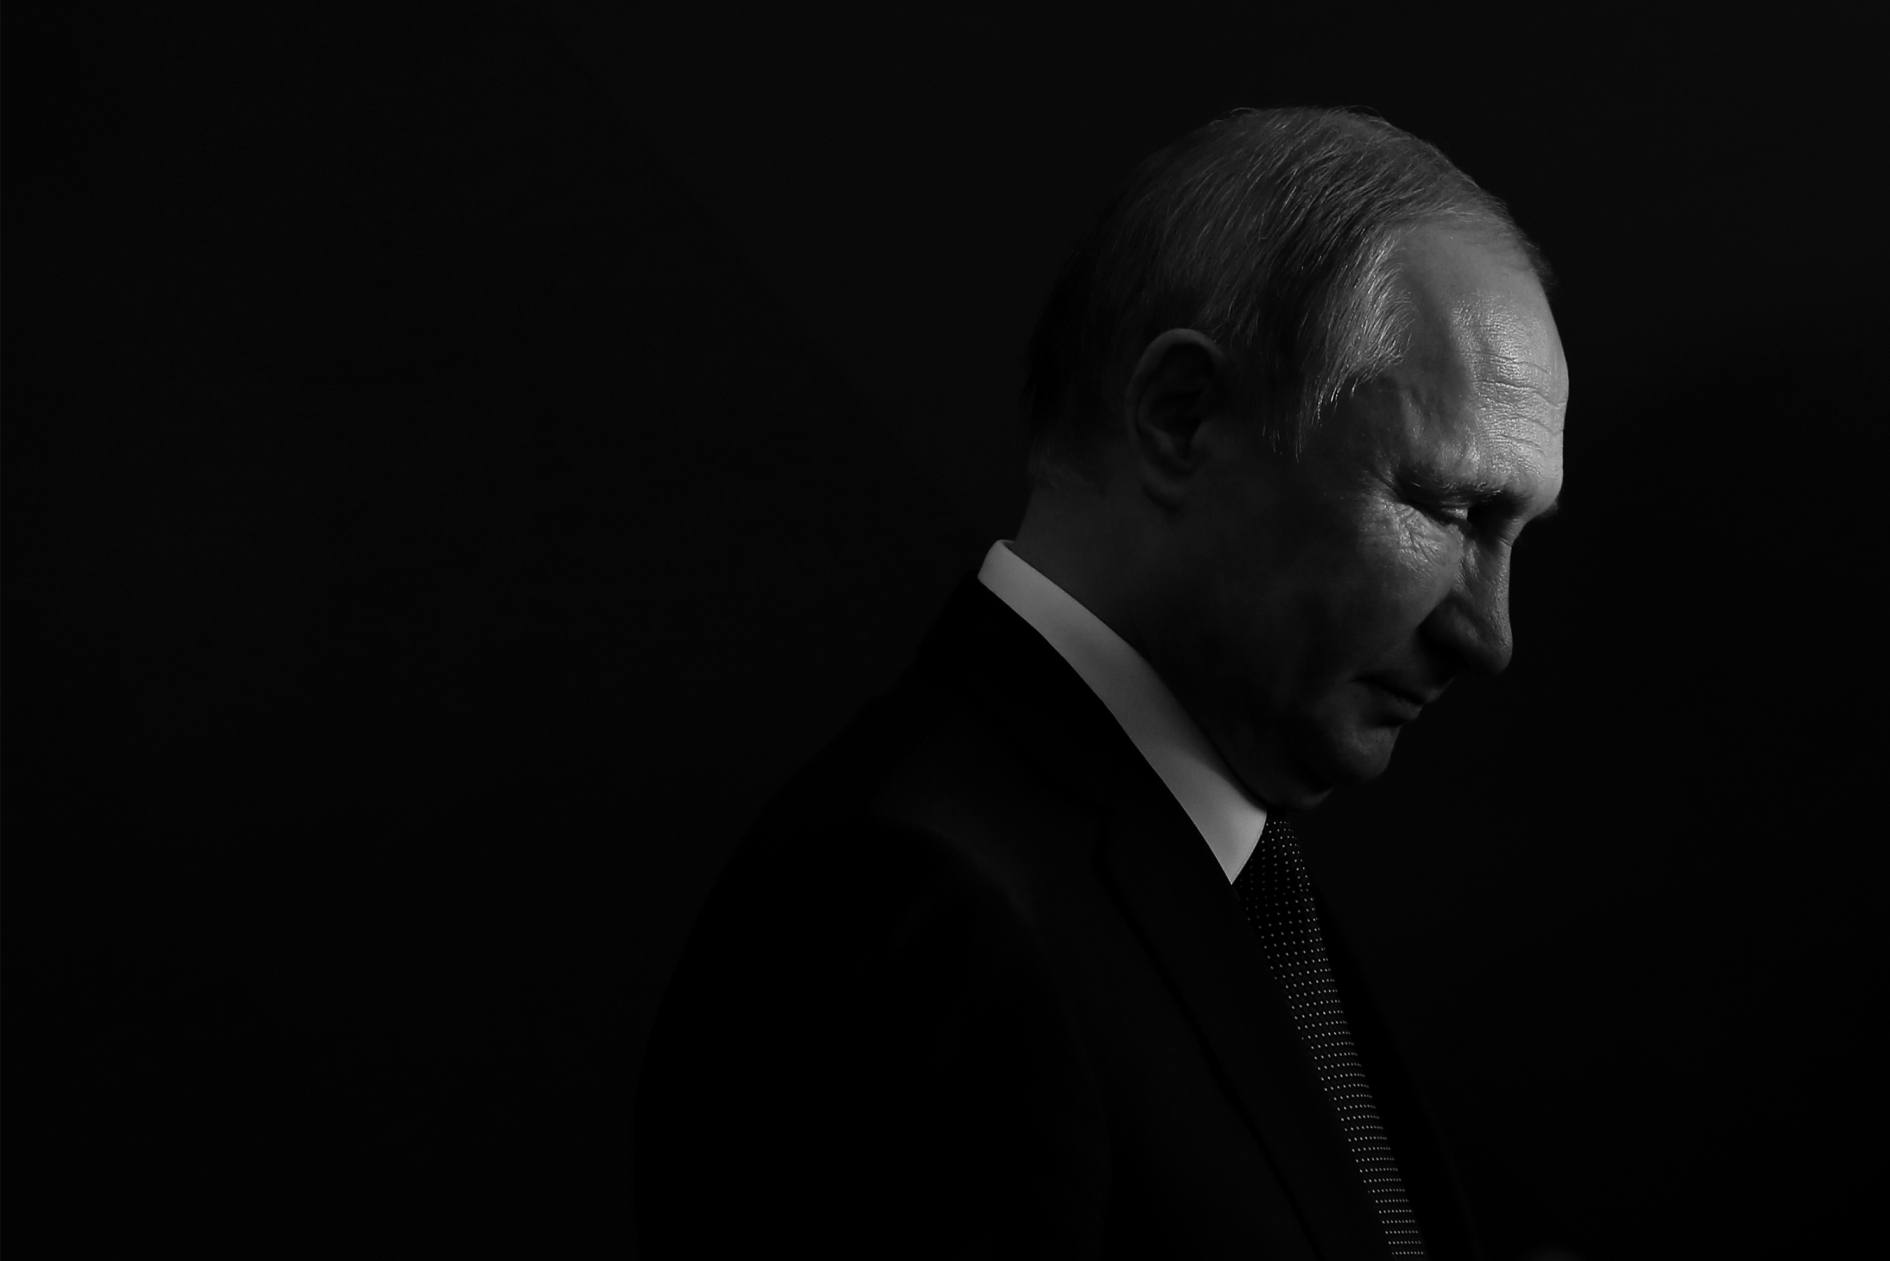 President of Russia Vladimir Putin, standing in the dark